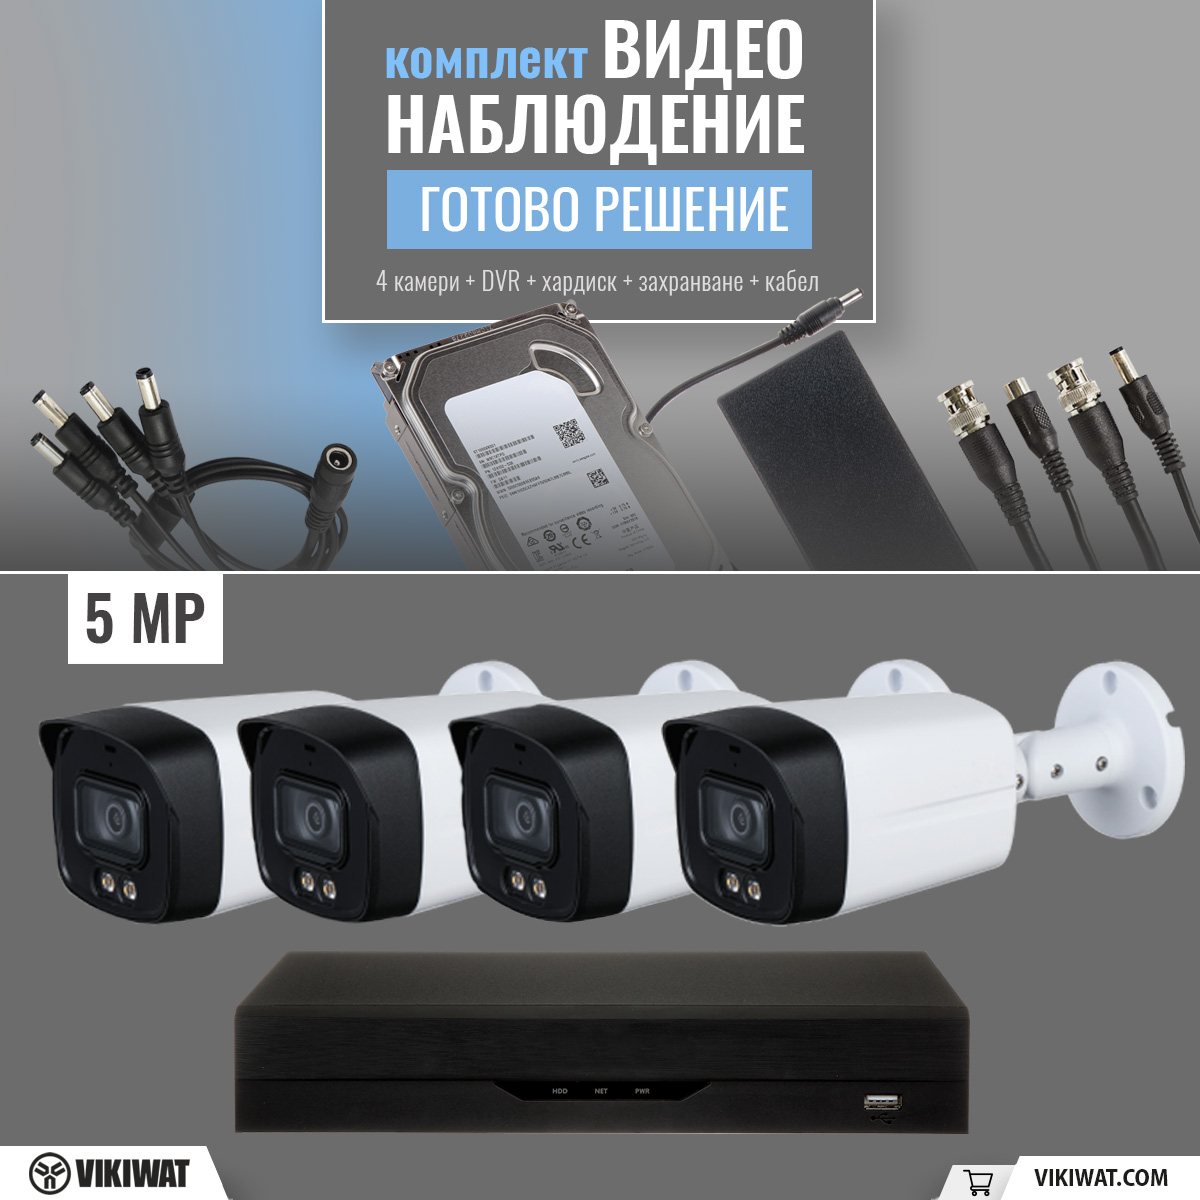 Комплект за видеонаблюдение 5Mp, 4бр. камери, DVR и аксесоари Готово решение